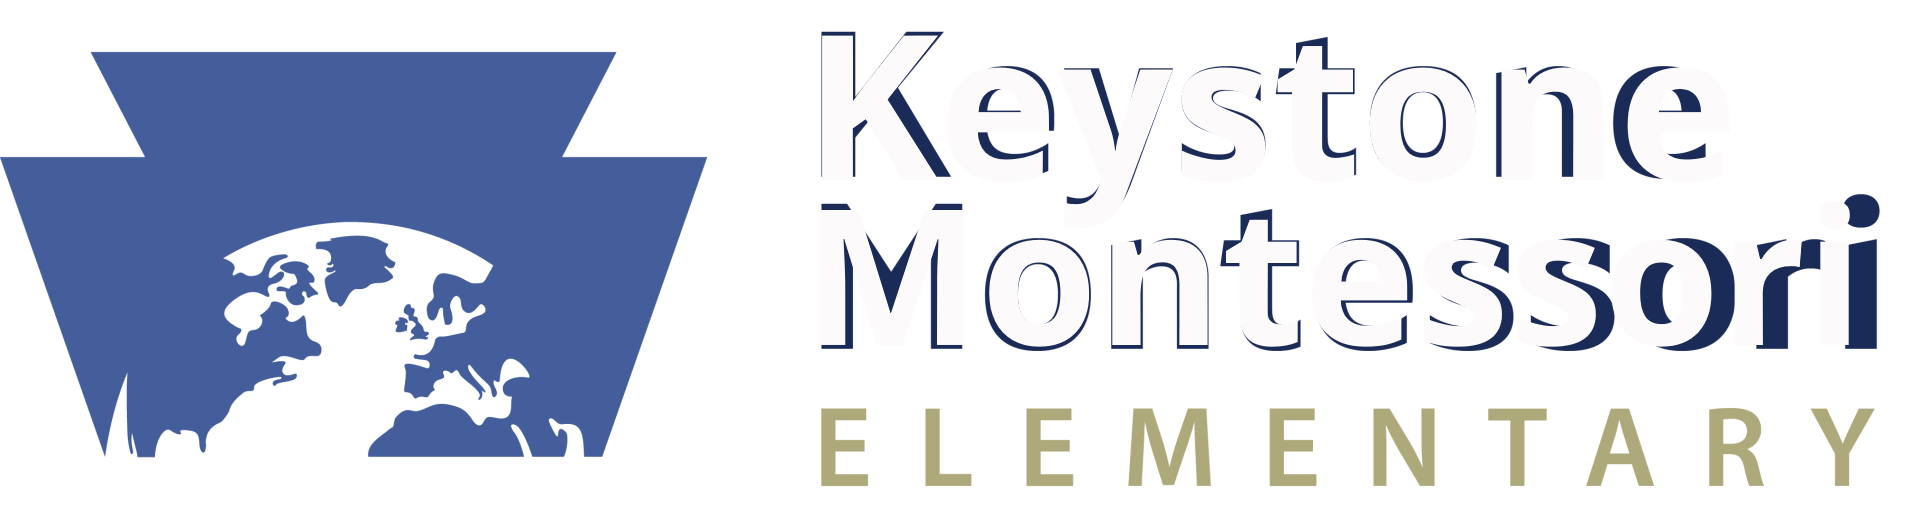 Kestone Montessori Elementary School